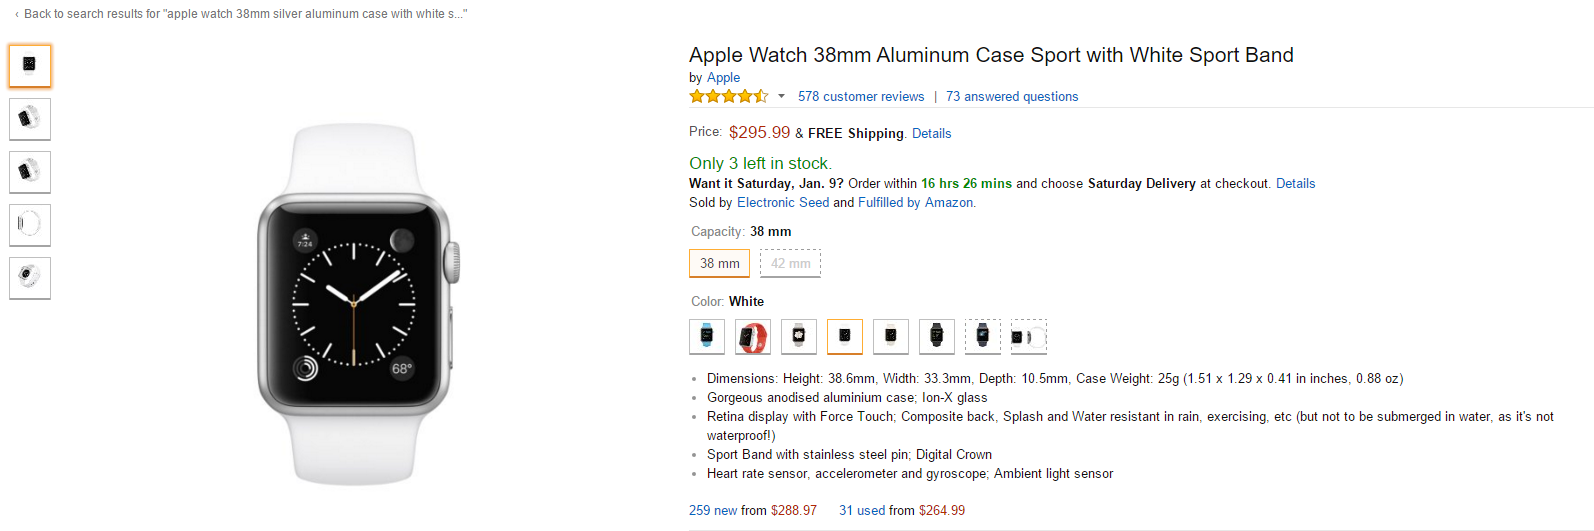 Apple Watch Buy Box at 5:50pm, 1/7/16.